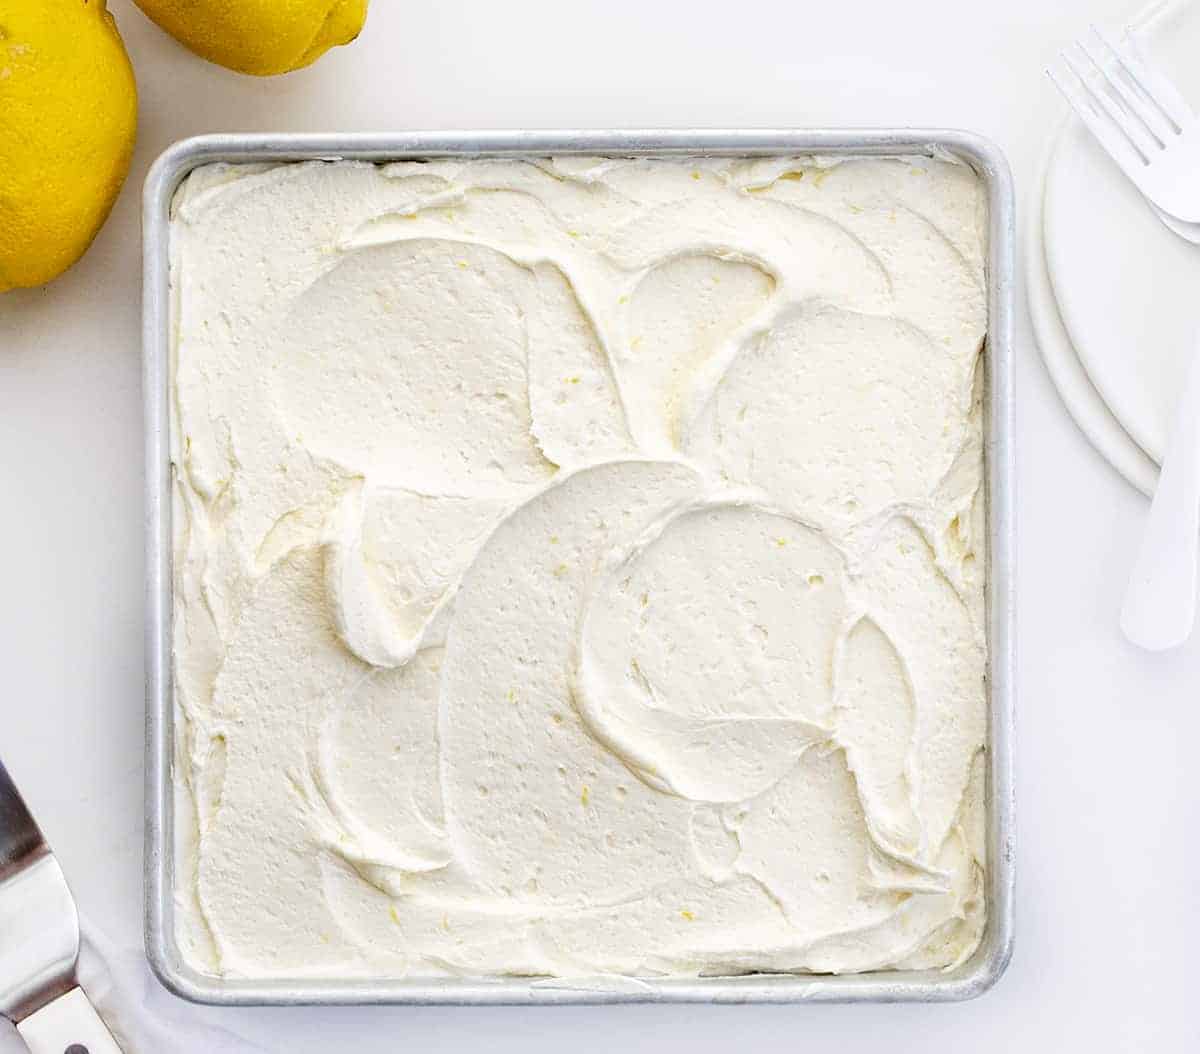 Pan of Lemon Crazy Cake with Lemon Buttercream Frosting in Swirls from Overhead.